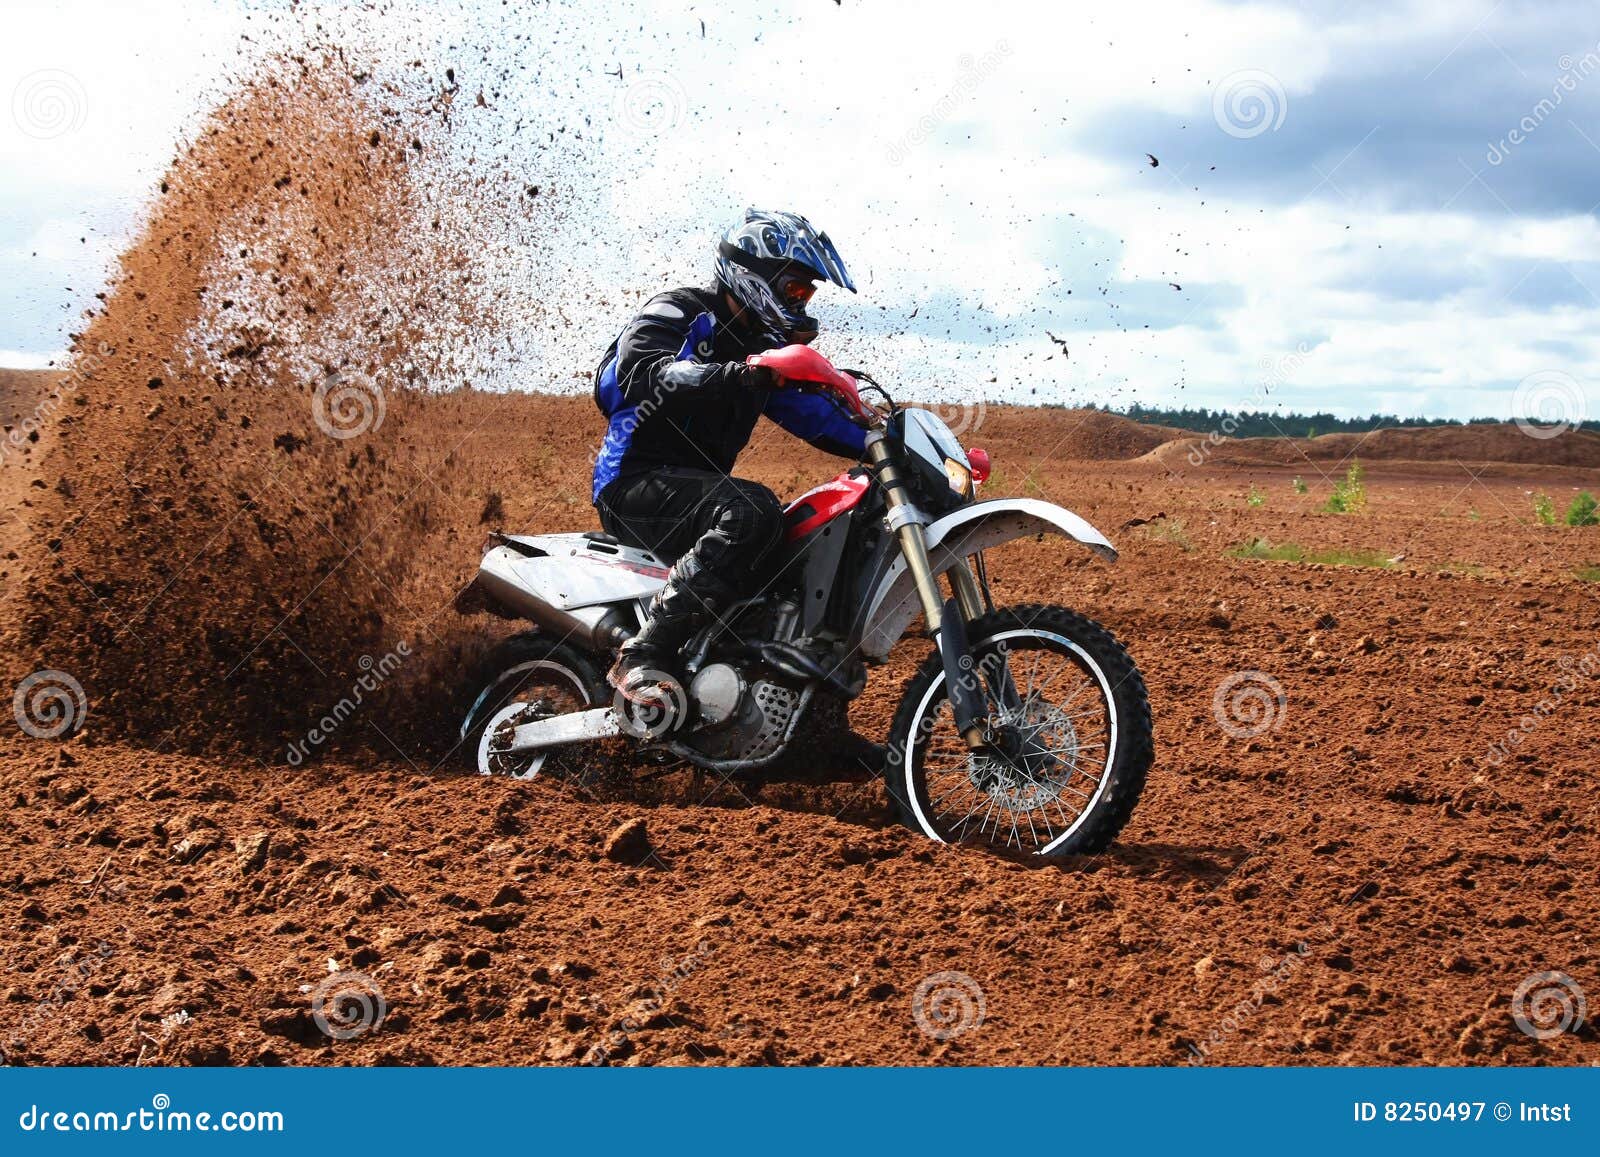 off-road motorbike driving in dirt.